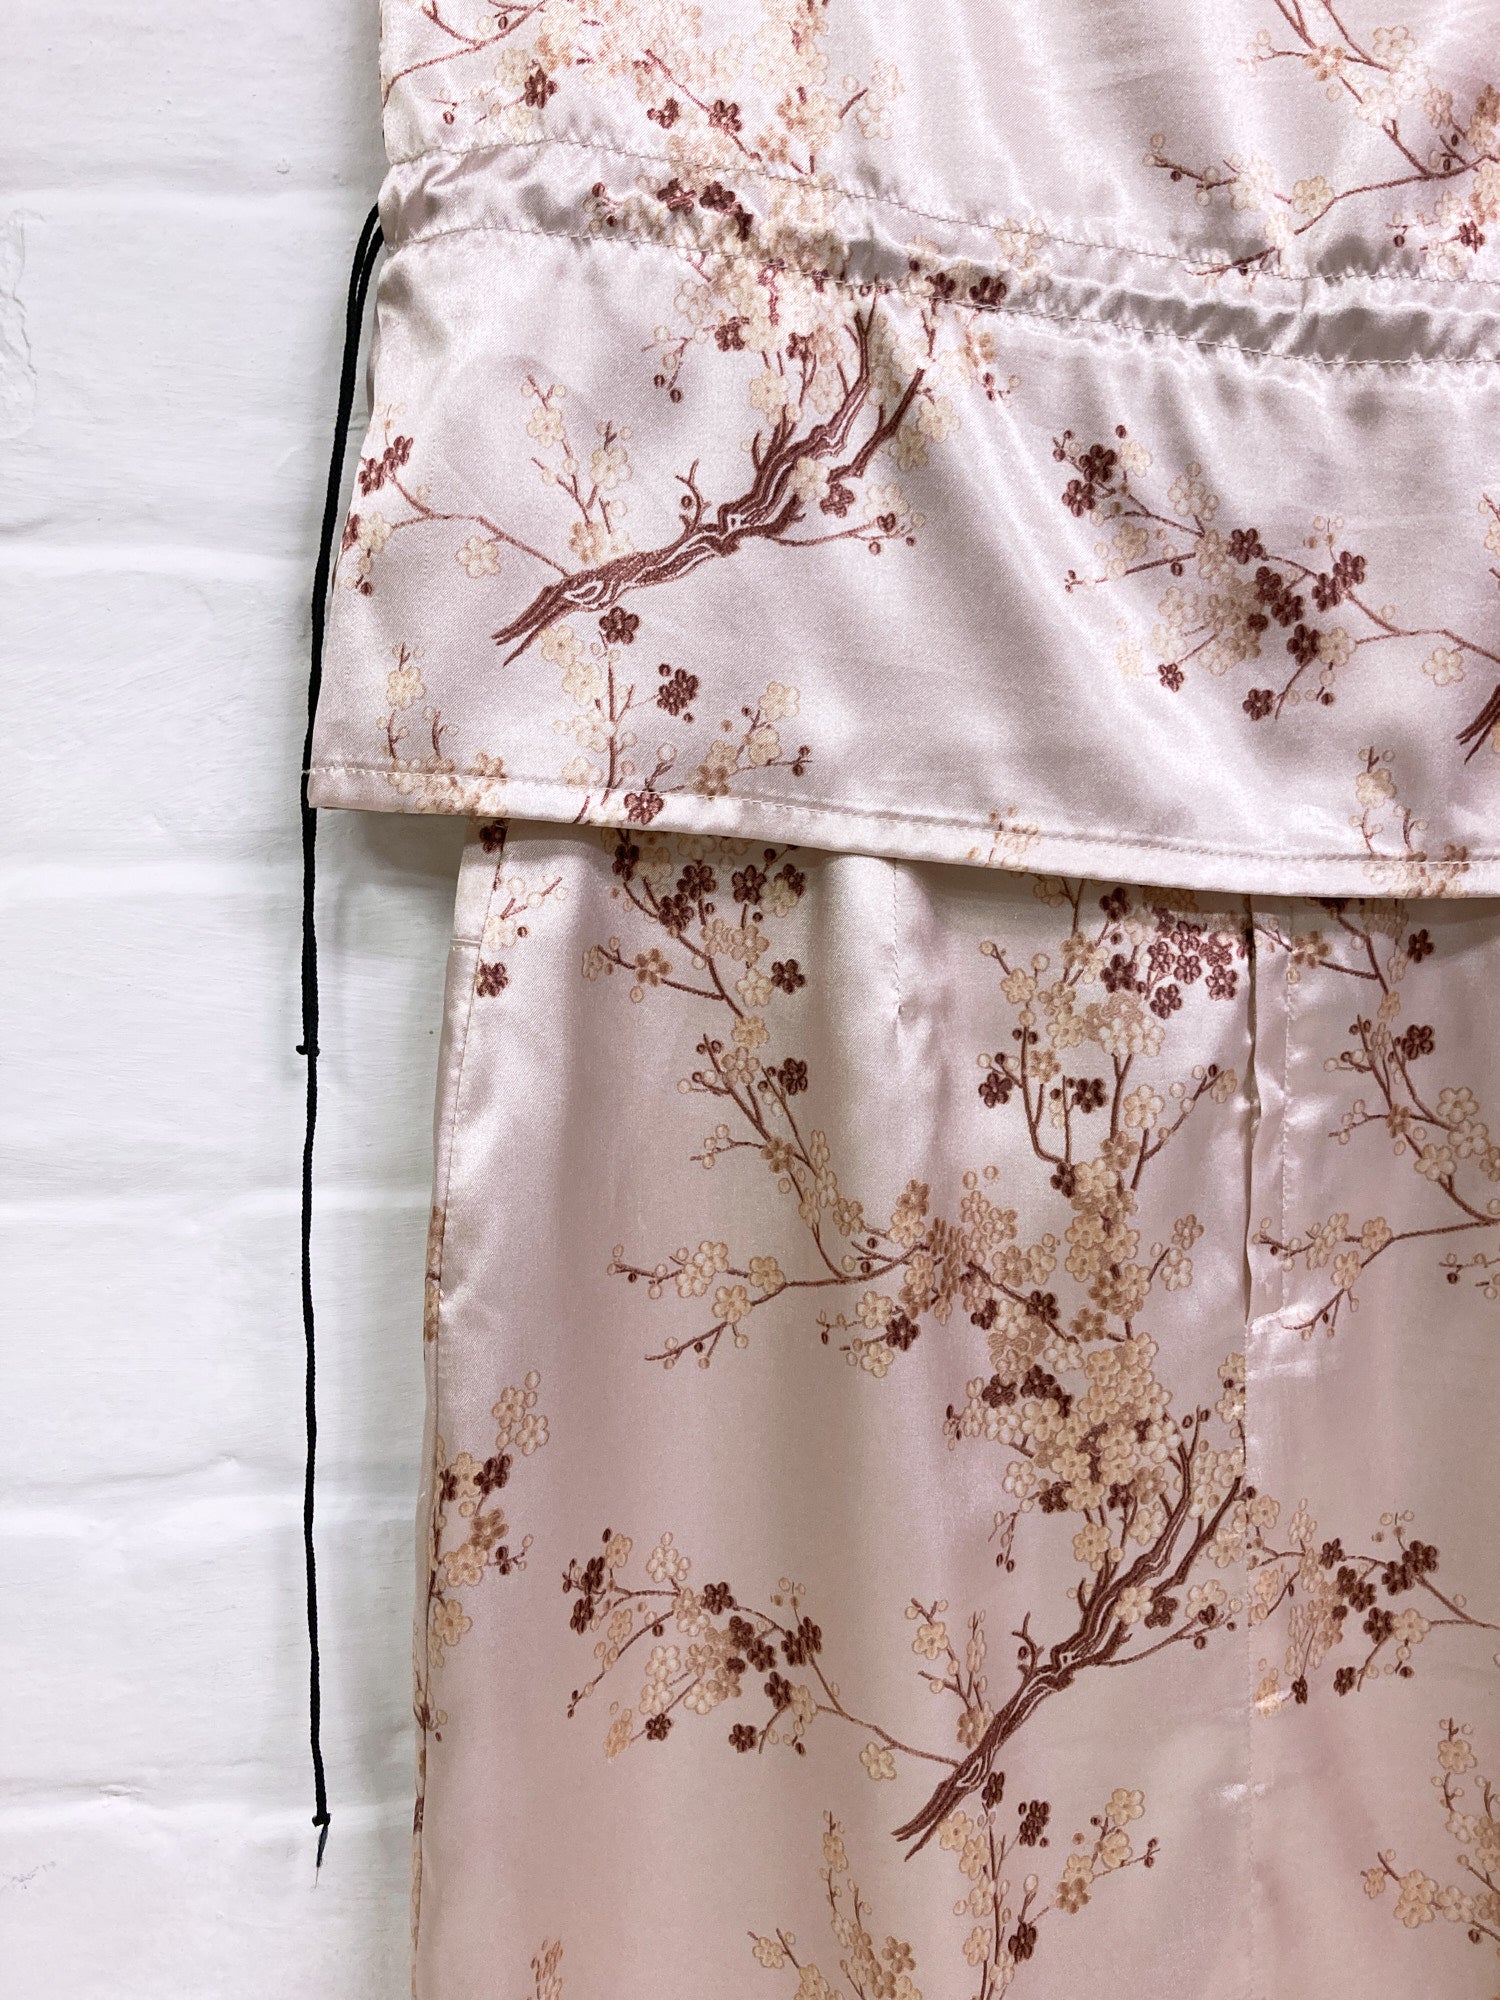 Jean Colonna AW1998 beige satin cherry blossom print sleeveless top skirt set